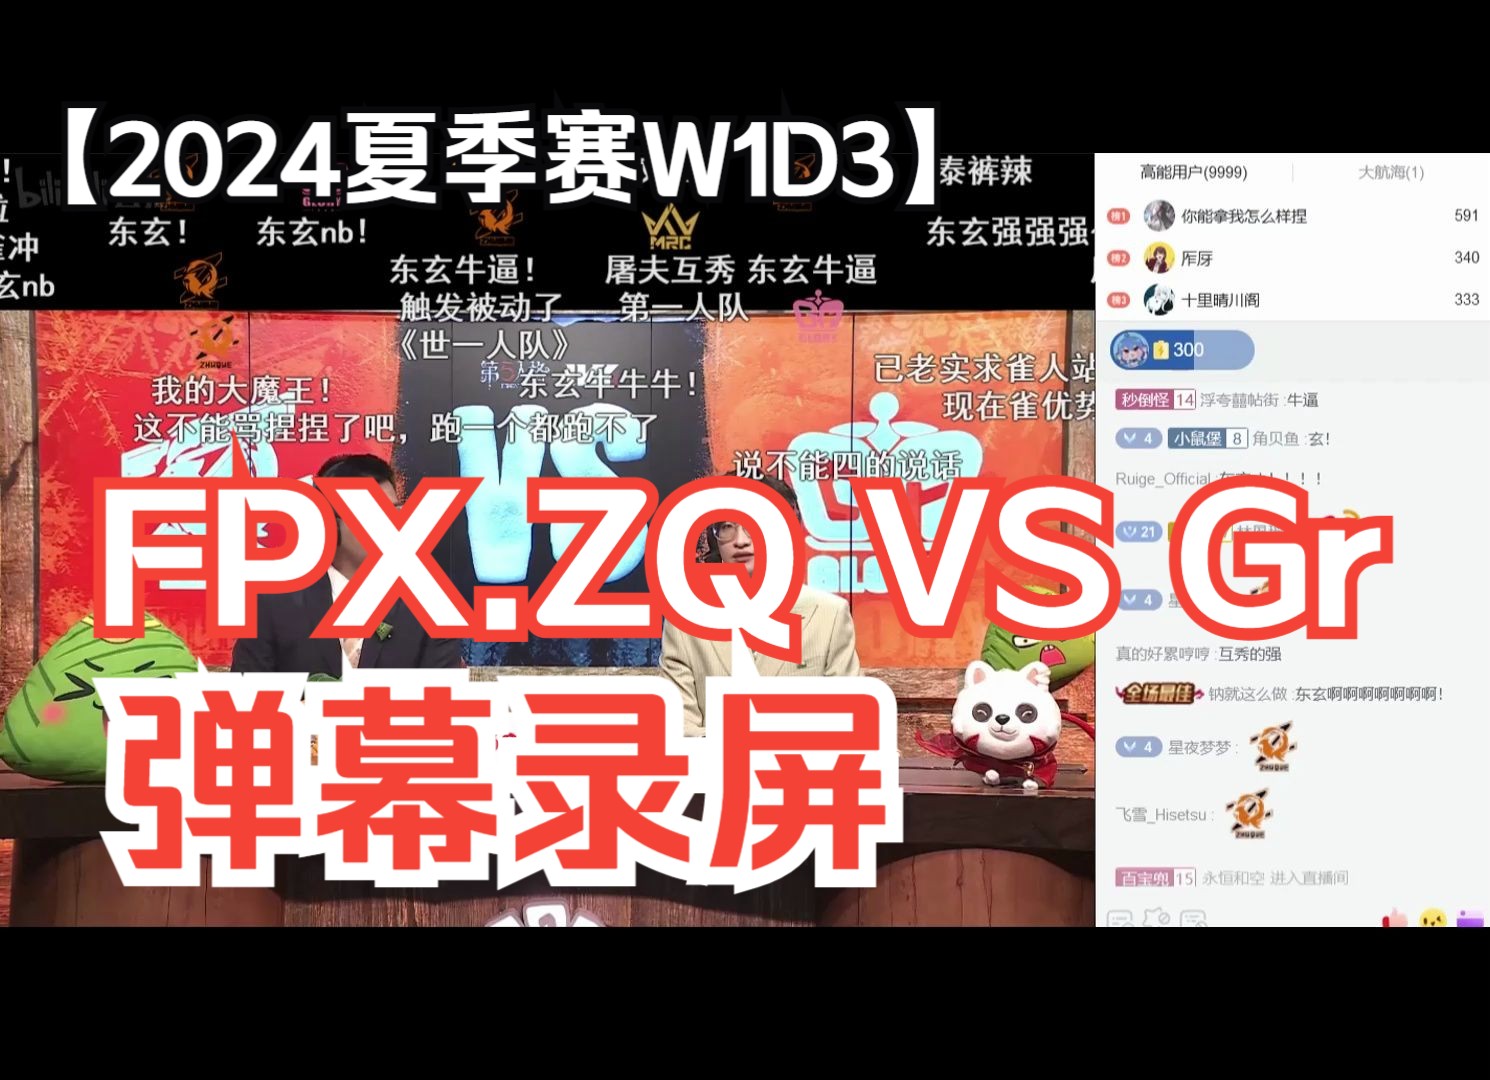 【IVL第五人格】24夏季赛W1D3 FPX.ZQ VS Gr弹幕录屏